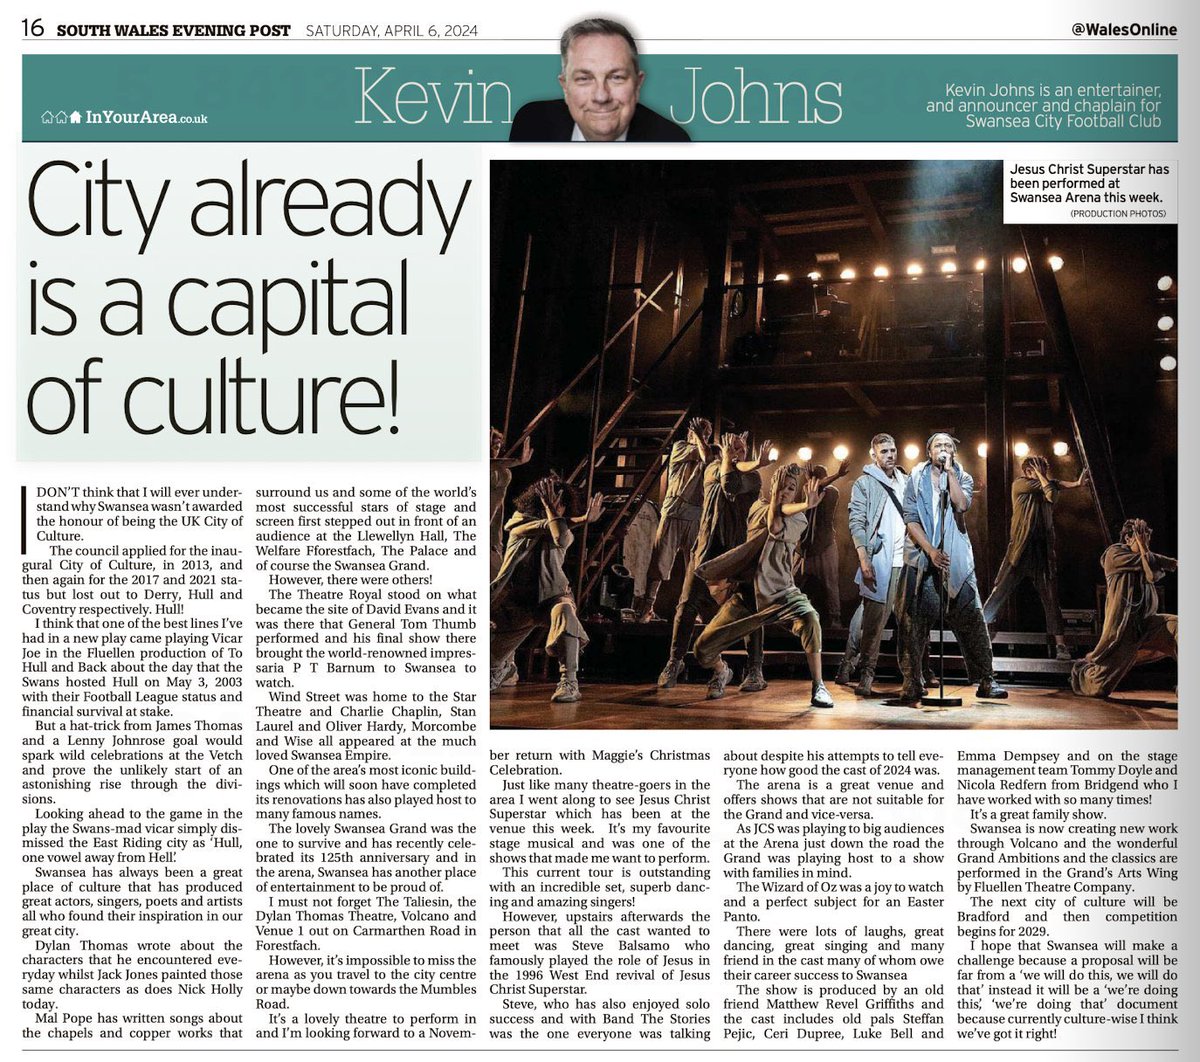 Swansea - The capital of culture! @KevJohnscymru We love this article and agree wholeheartedly. @SwanseaGrand @SwanseaCouncil @VolcanoUK @LighthouseTheat @FluellenTheatre @ArenaSwansea @DTCSwansea @TaliesinSwansea @no_venue @elysiumgallery @GlynnVivian @bunkhousebar